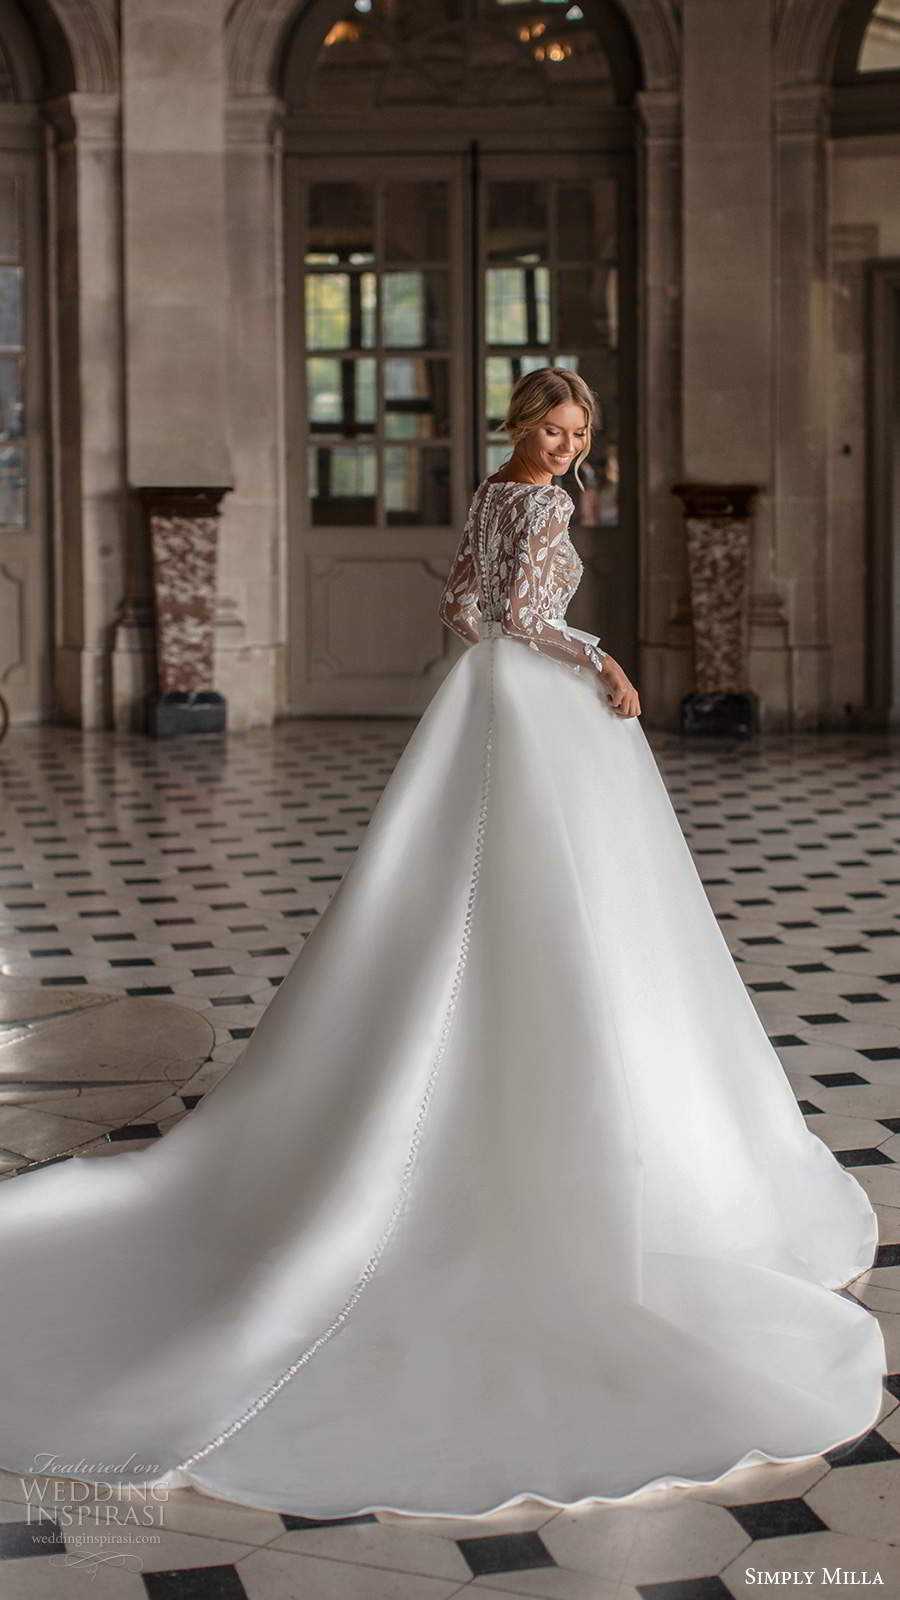 simply milla nova 2020 bridal illusion long sleeves bateau neckline embellished bodice clean skirt a line ball gown wedding dress chapel train (6) bv